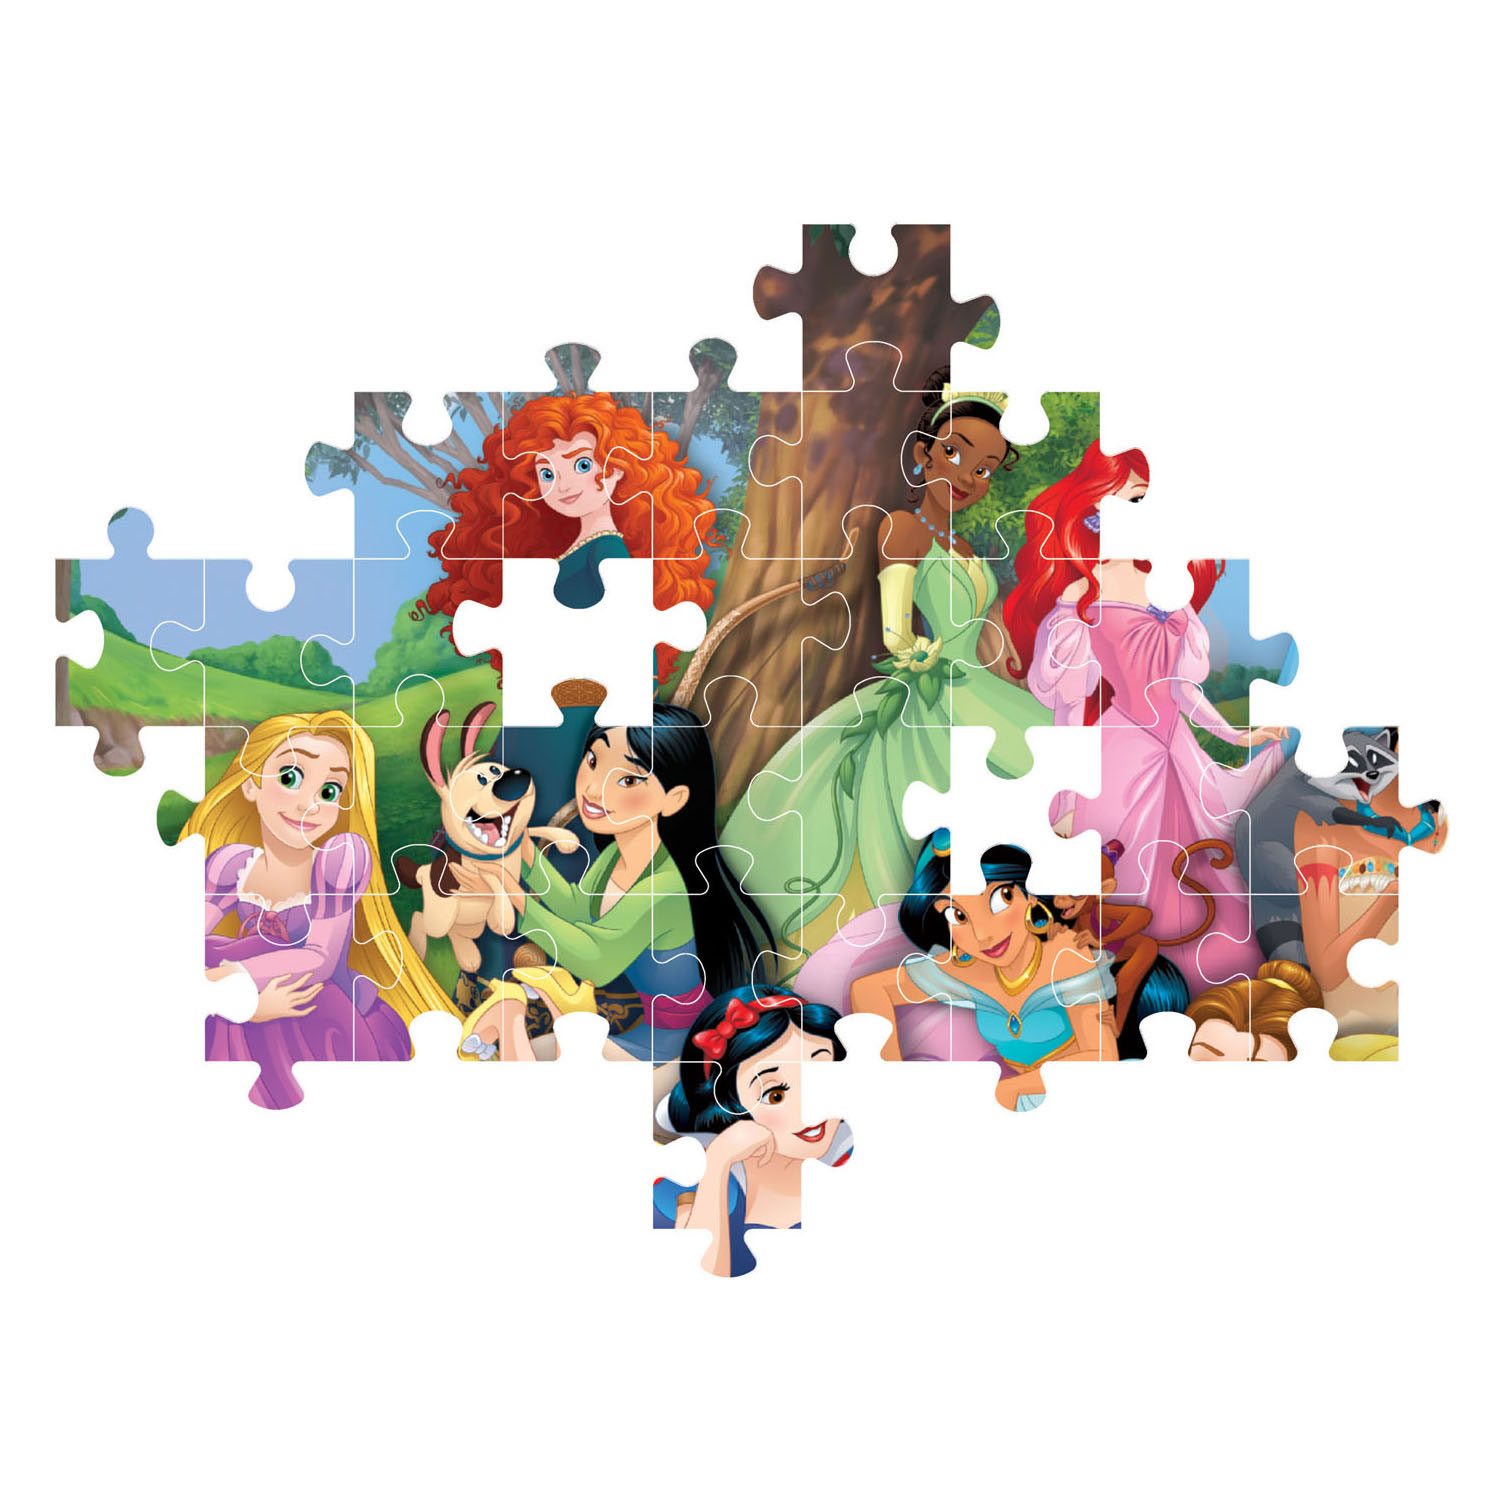 Clementoni Puzzle - Disney Prinses, 104.